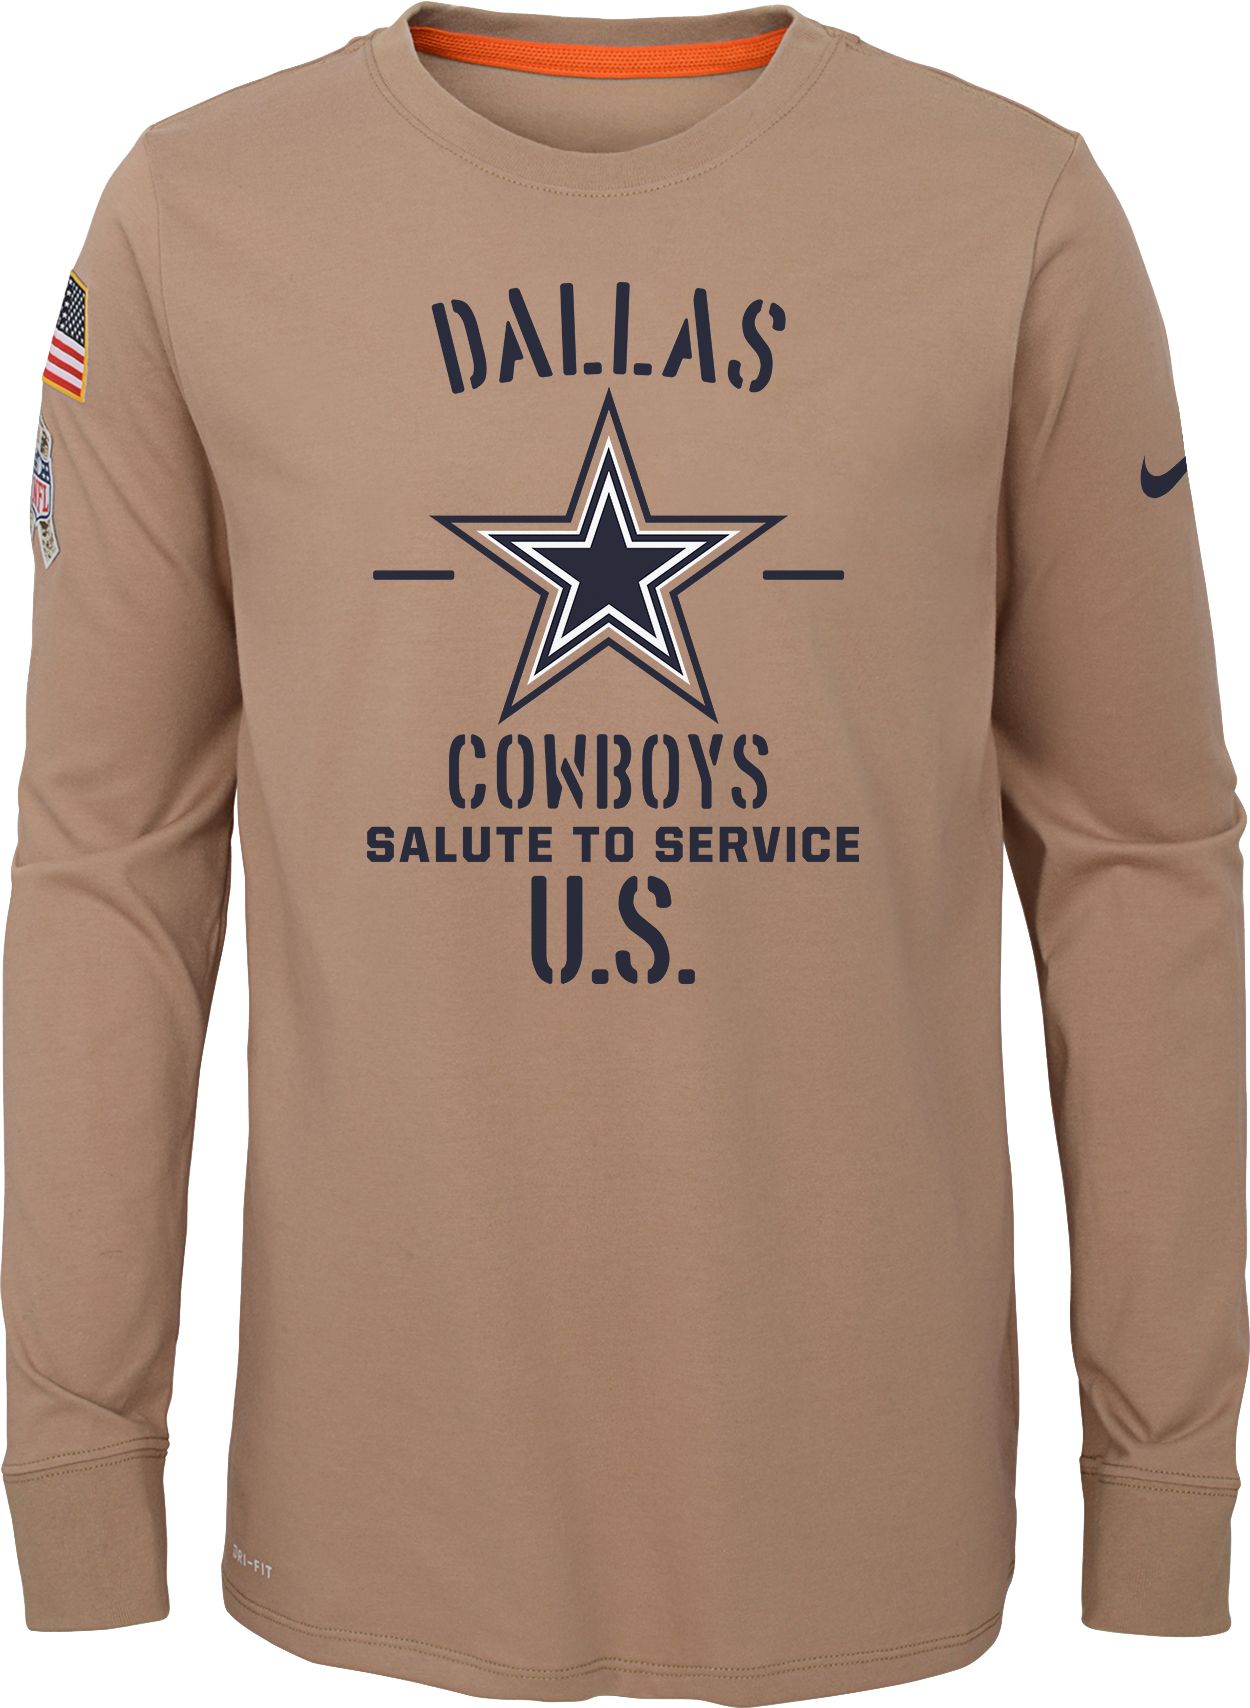 dallas cowboys salute to service long sleeve shirt